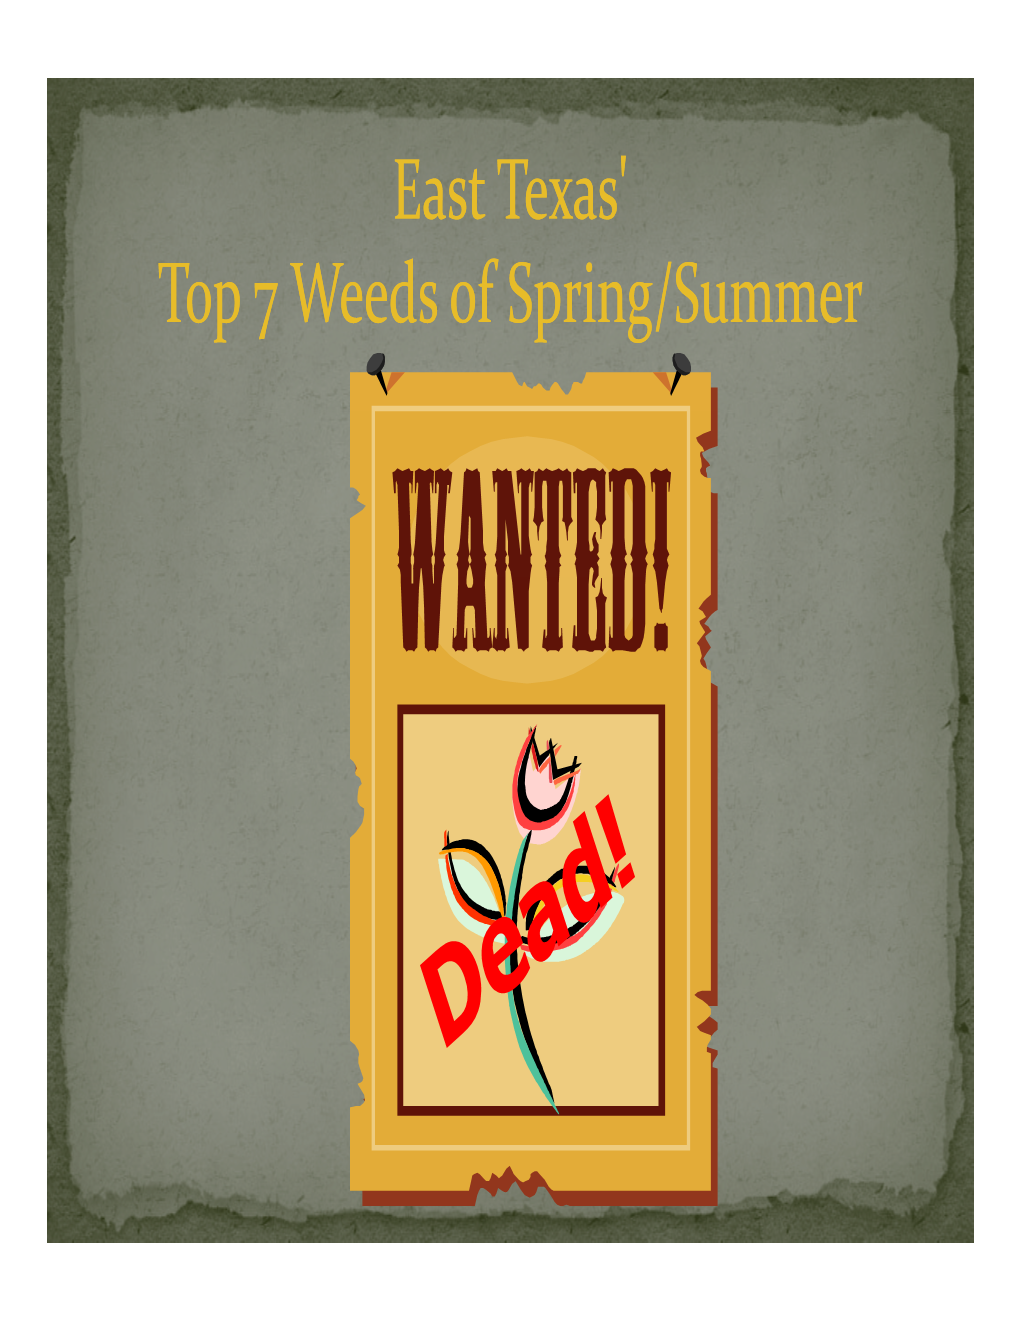 East Texas' Top 7 Weeds of Spring/Summer